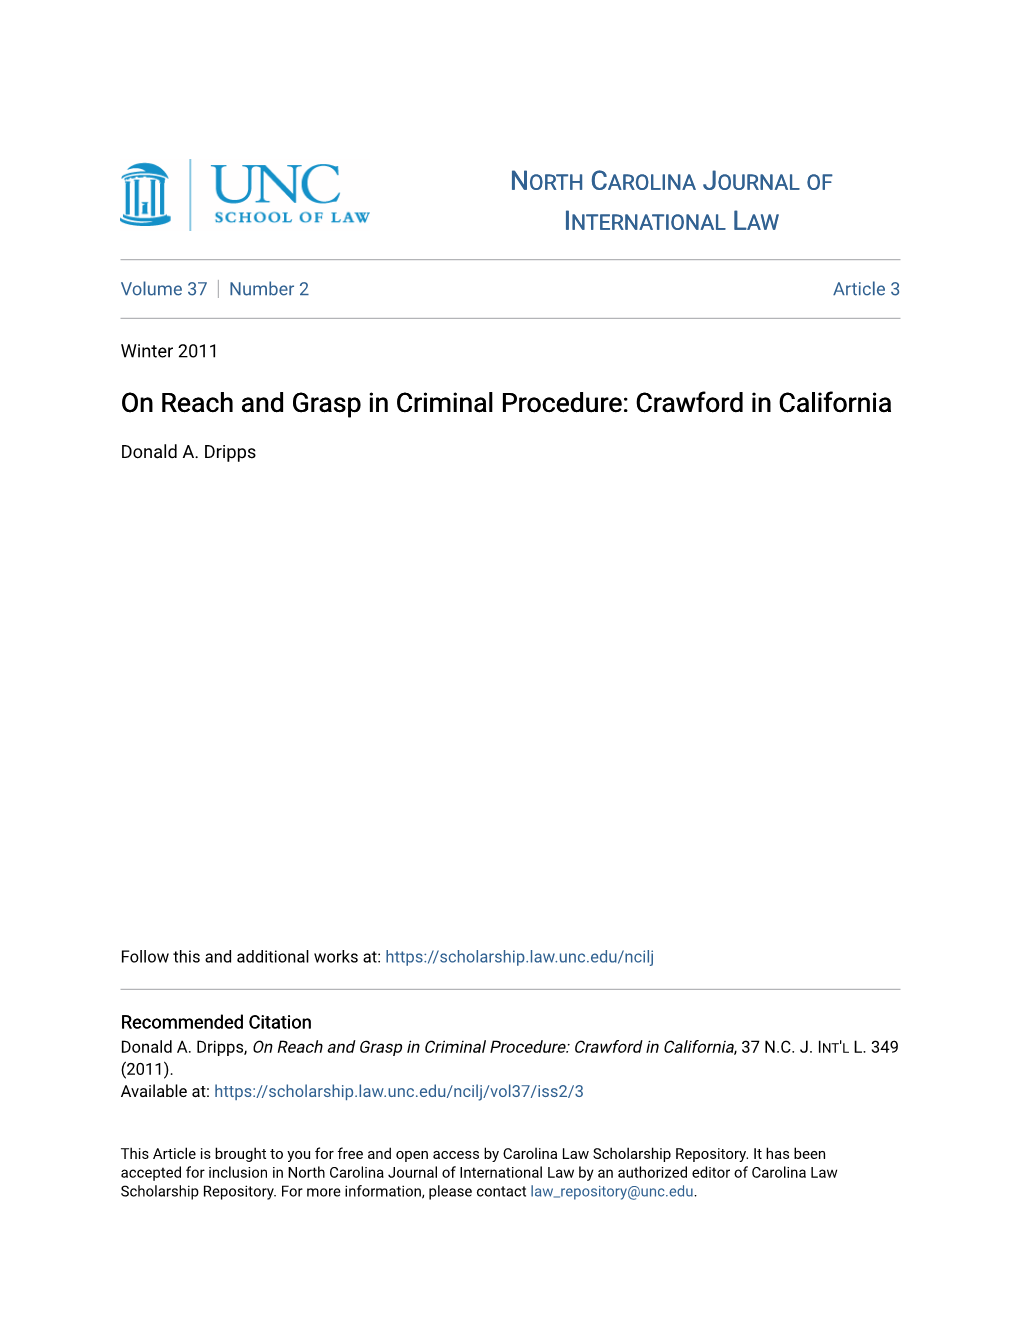 On Reach and Grasp in Criminal Procedure: Crawford in California